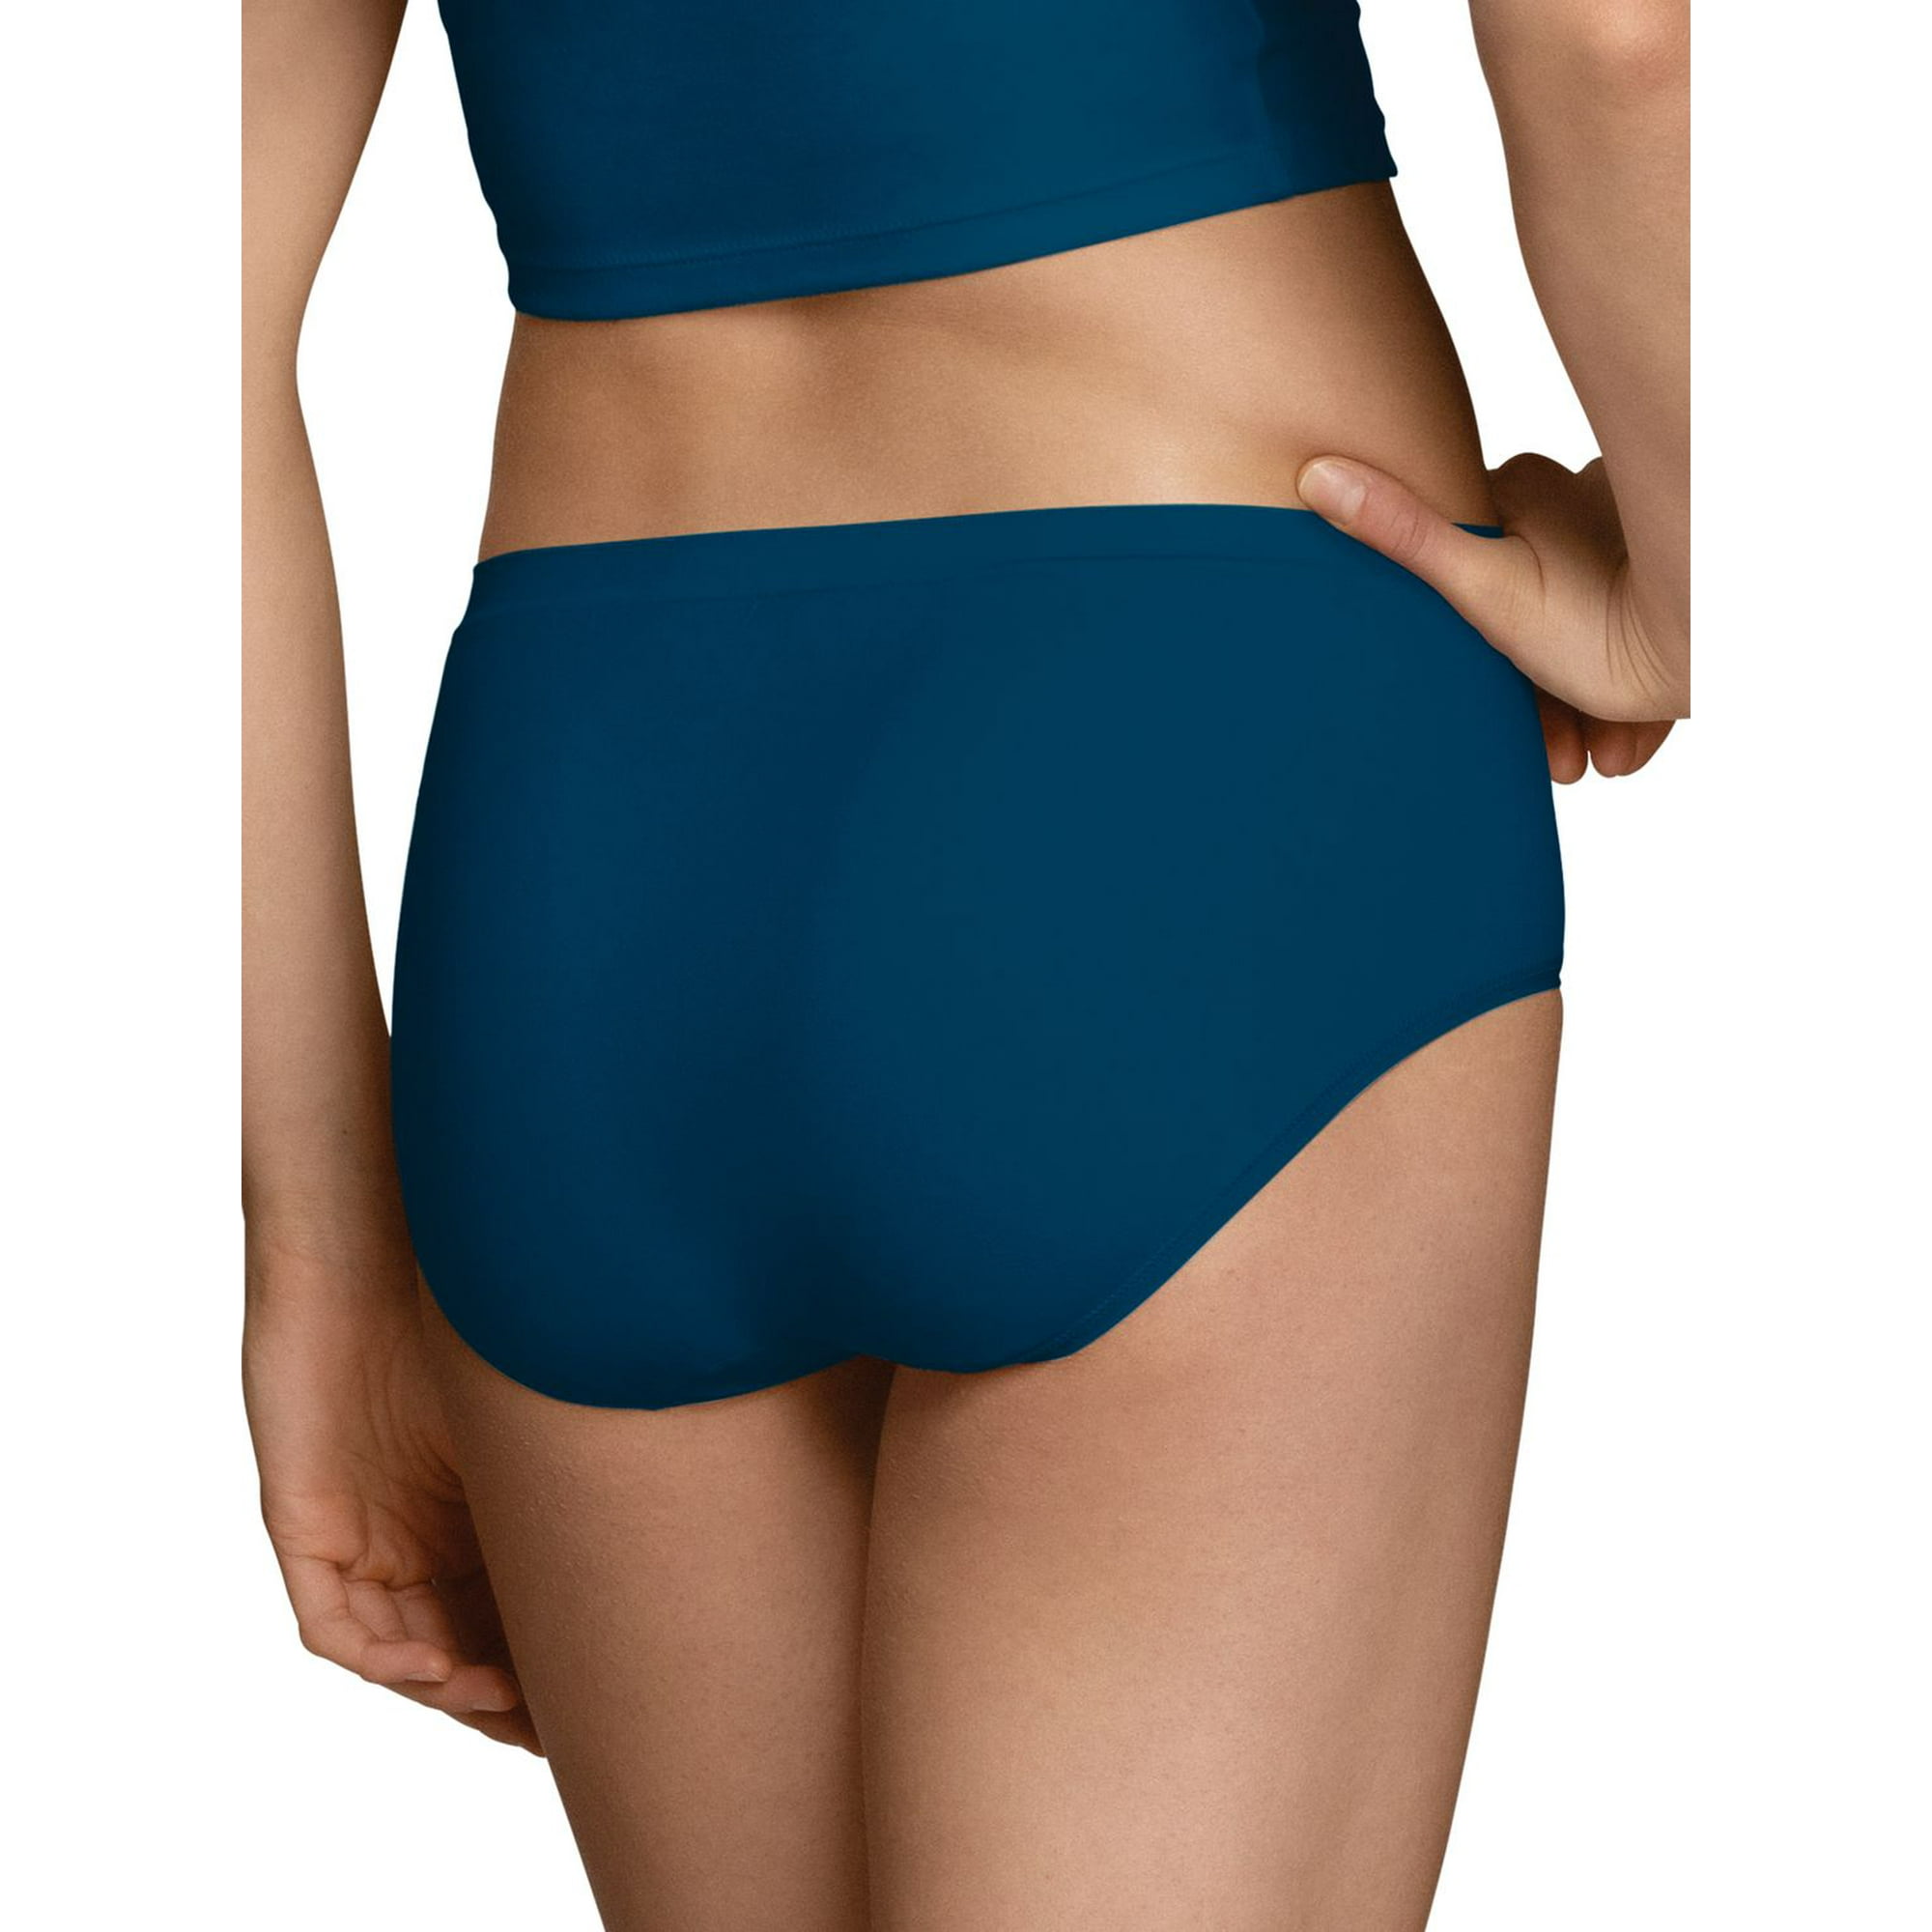 Modal Lite Extra Soft, Bikini Cut Women's Underwear (2-pack